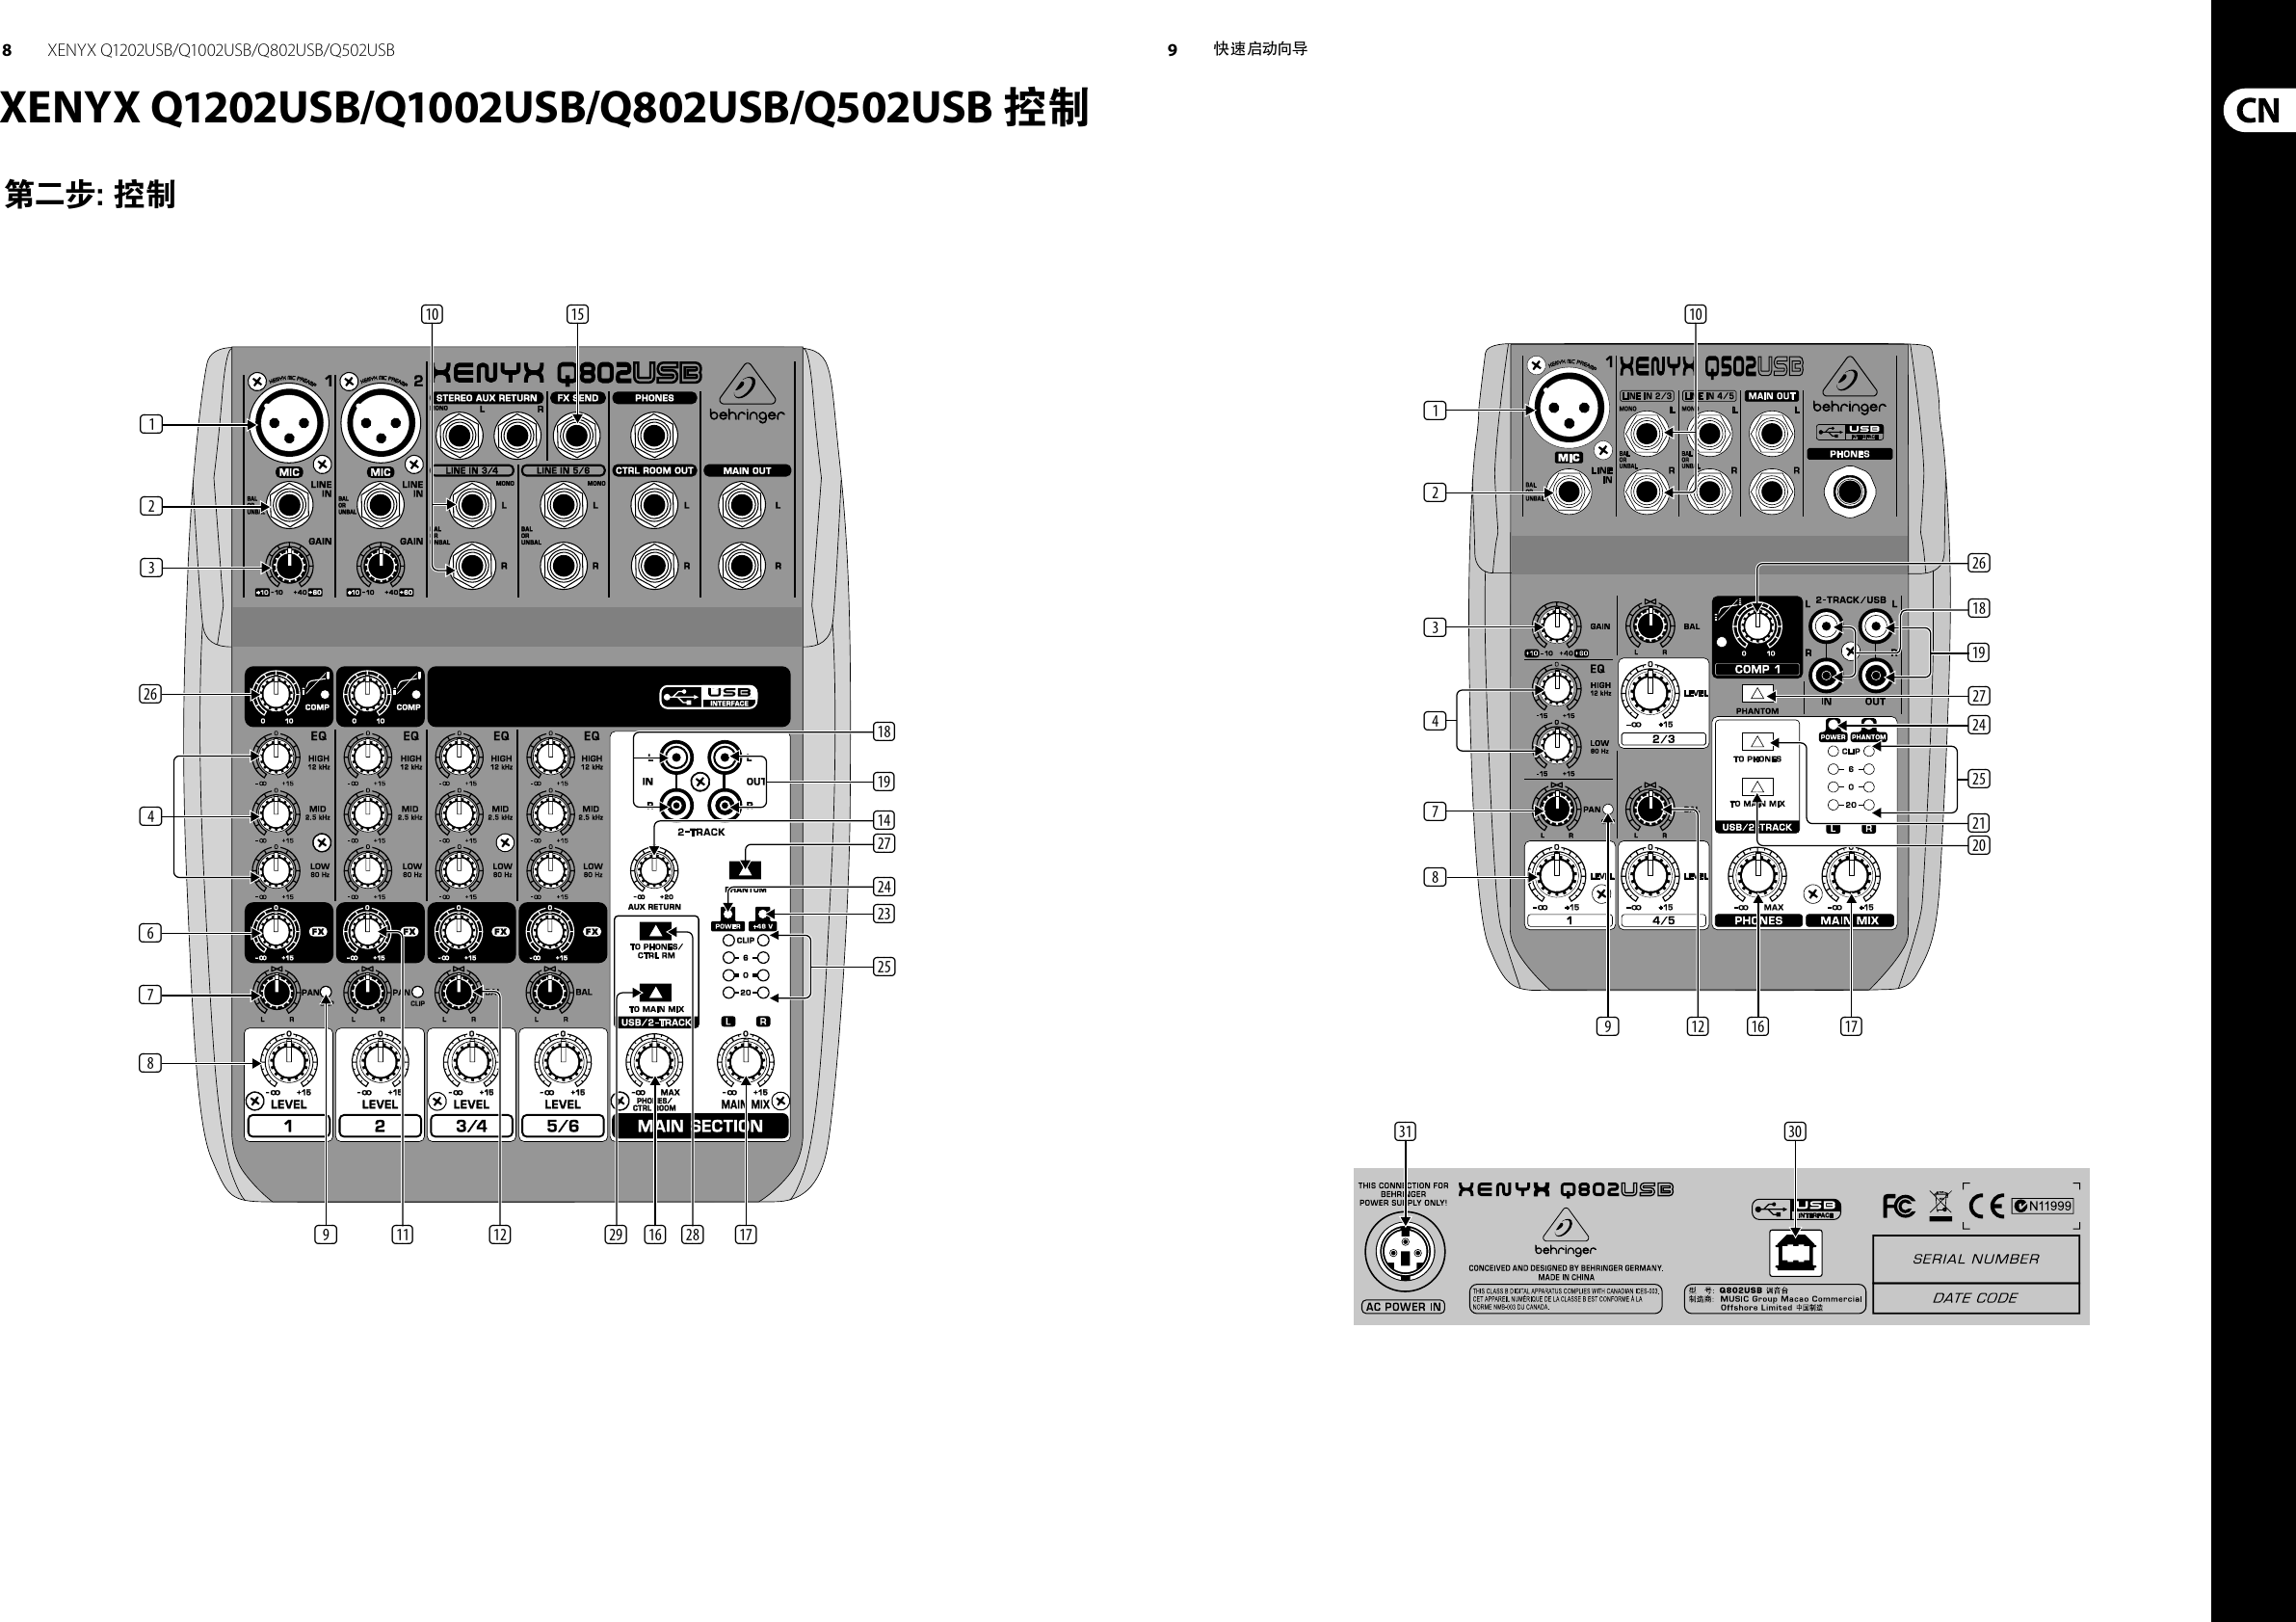 behringer xenyx q502usb manual pdf